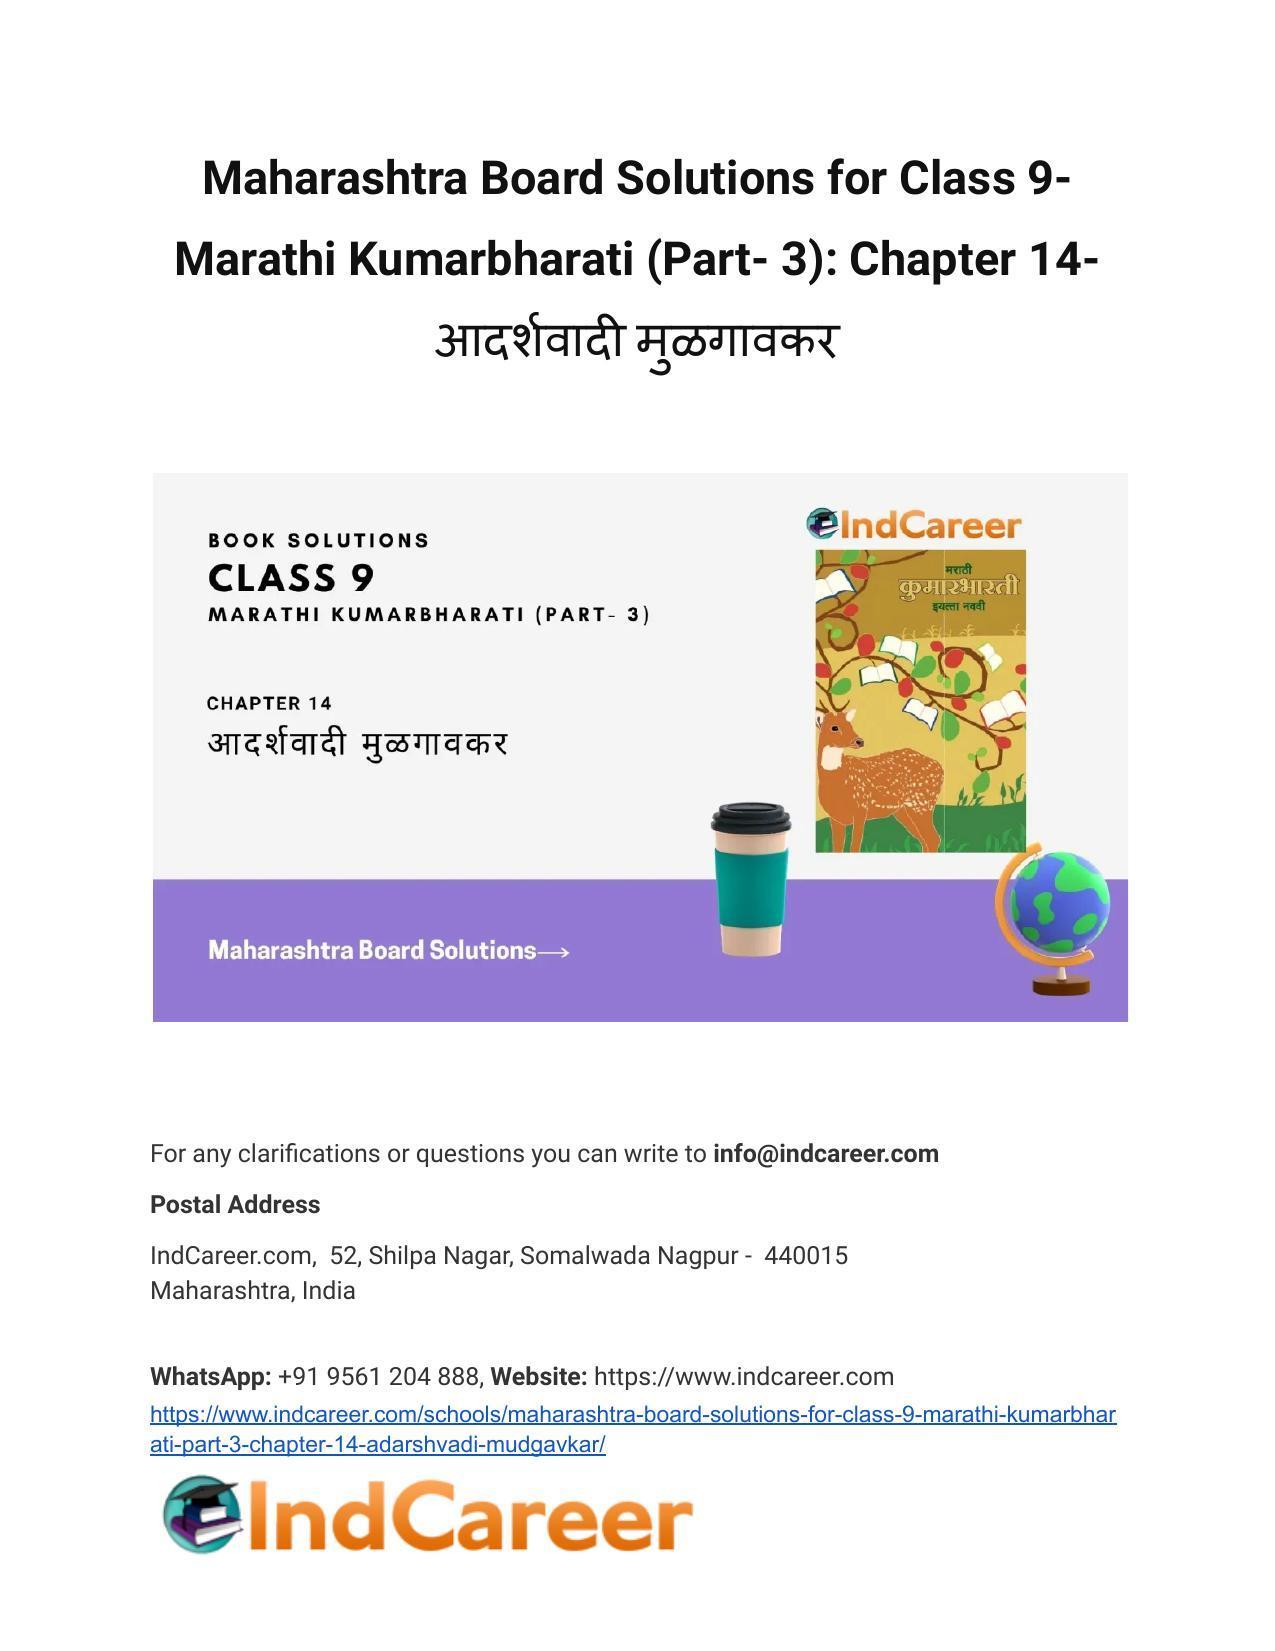 Maharashtra Board Solutions for Class 9- Marathi Kumarbharati (Part- 3): Chapter 14- आदर्शवादी मुळगावकर - Page 1